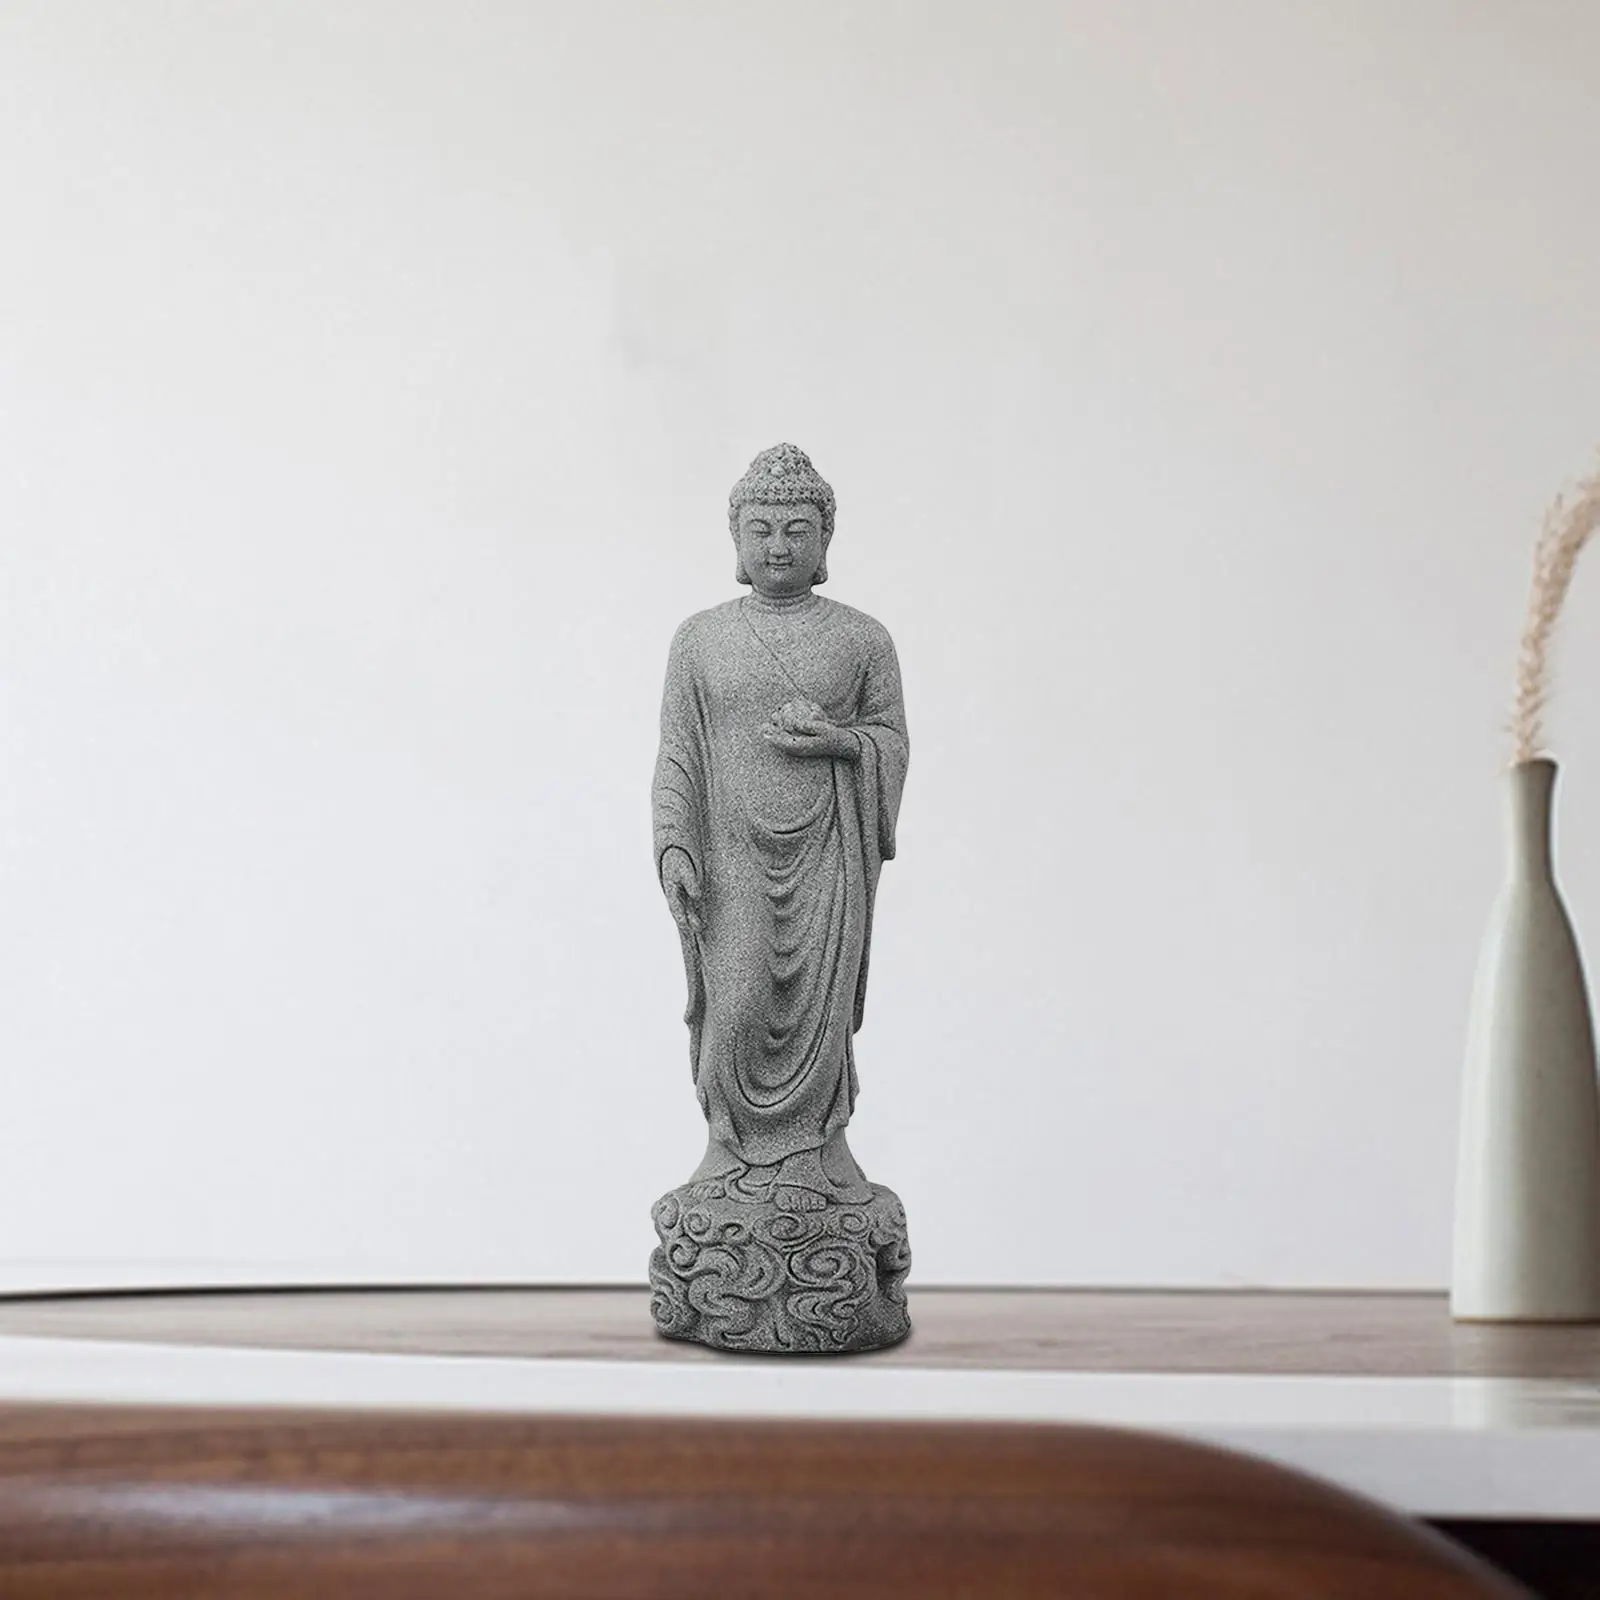 Mini Buddha Figurine Gift Meditation Craft Standing for Home Office Yoga Room Car